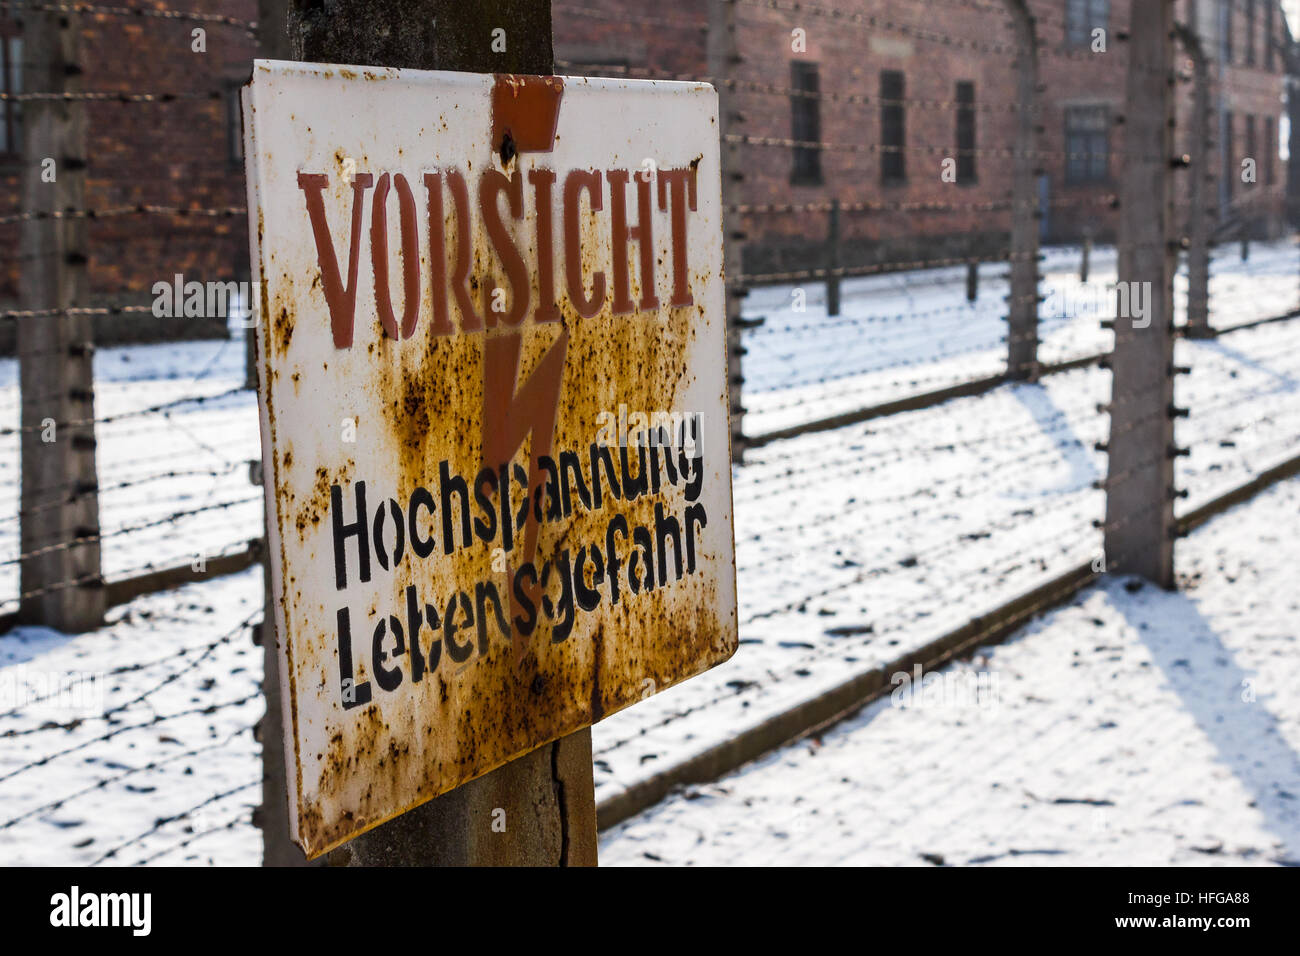 Sign 'vorsicht hochspannung lebensgefahr' was seen in front of some of the perimeter fences which were electrified at Auschwitz. Stock Photo